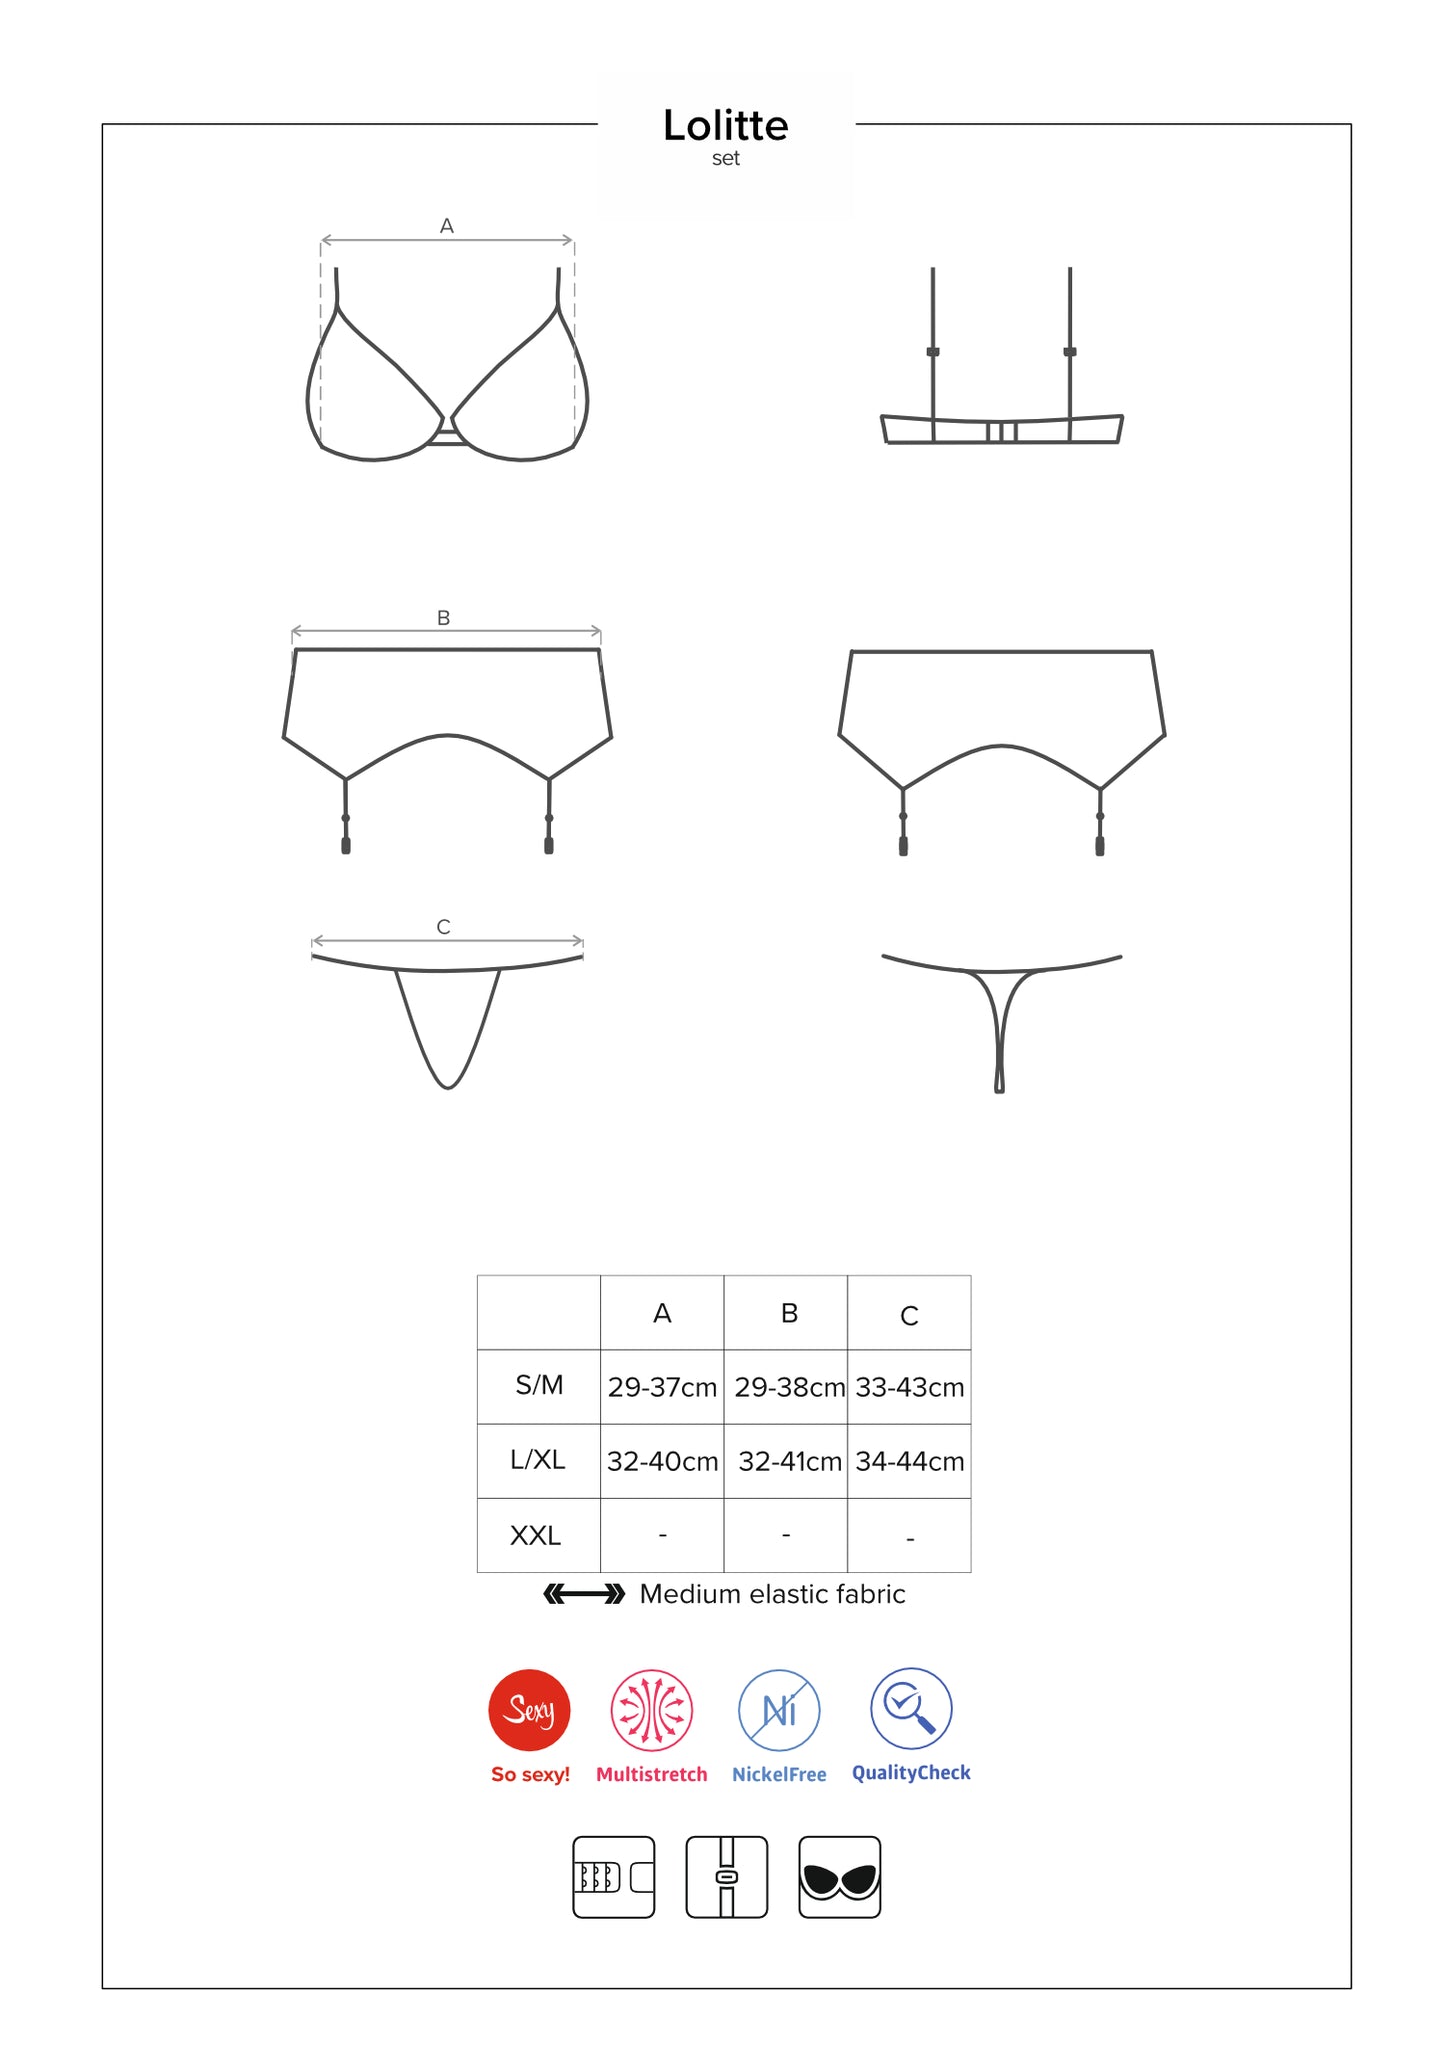 Lolitte three-piece set consisting of bra, garter belt and thong